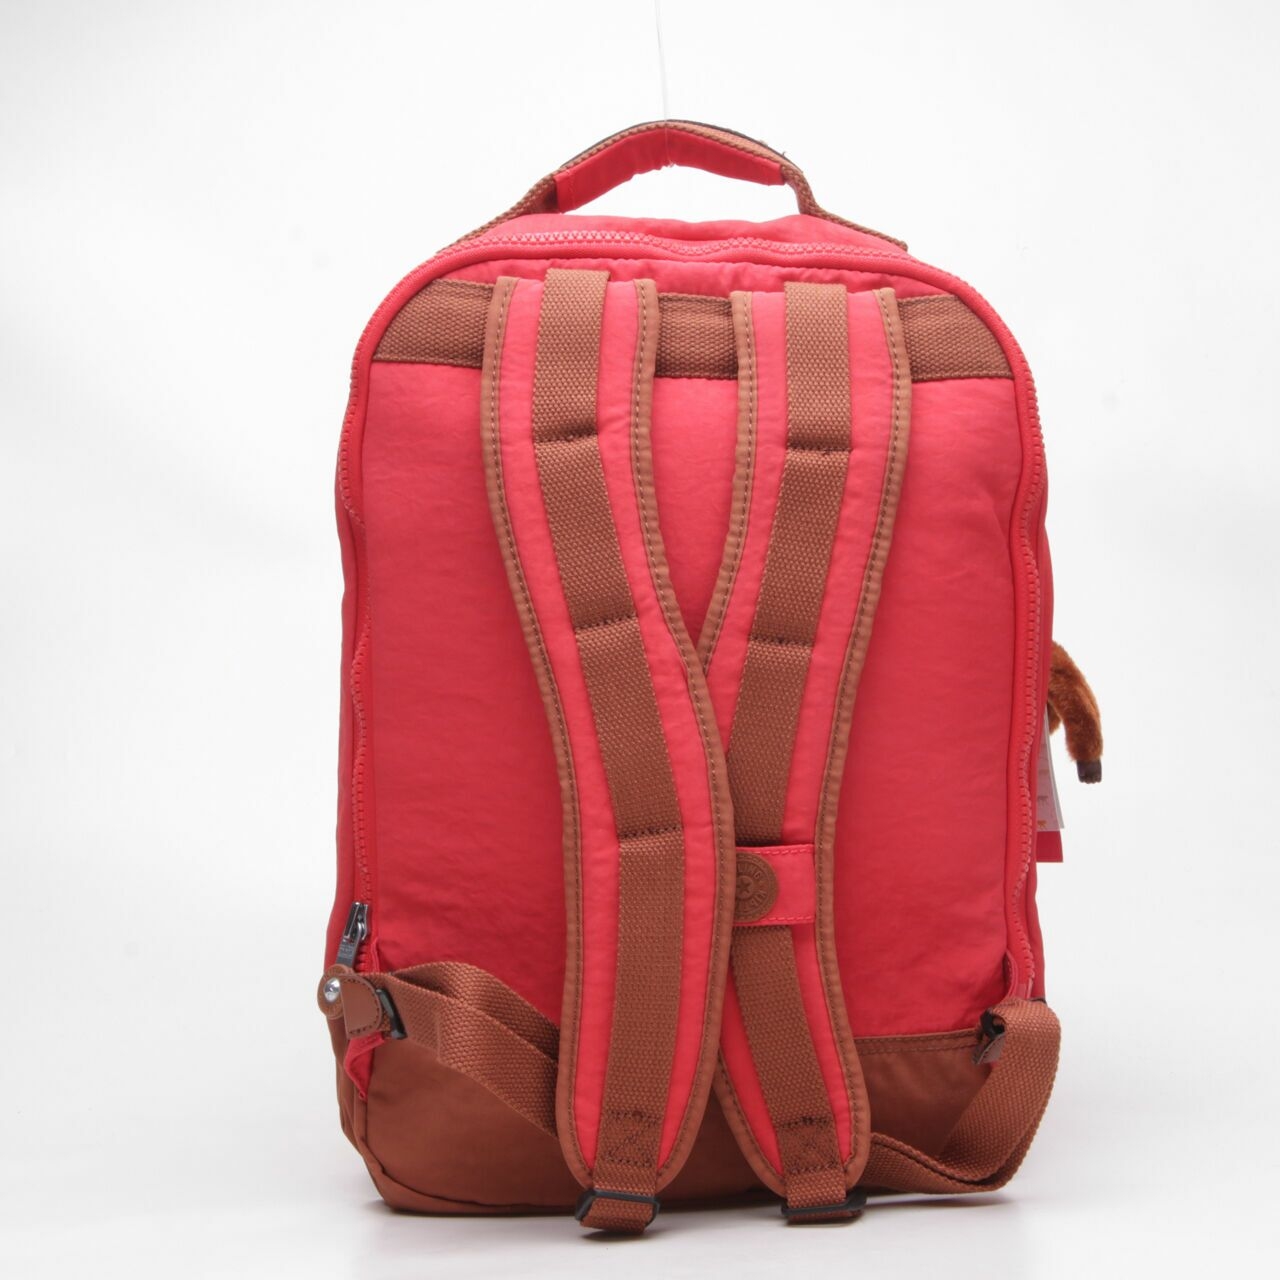 Kipling Red Backpack